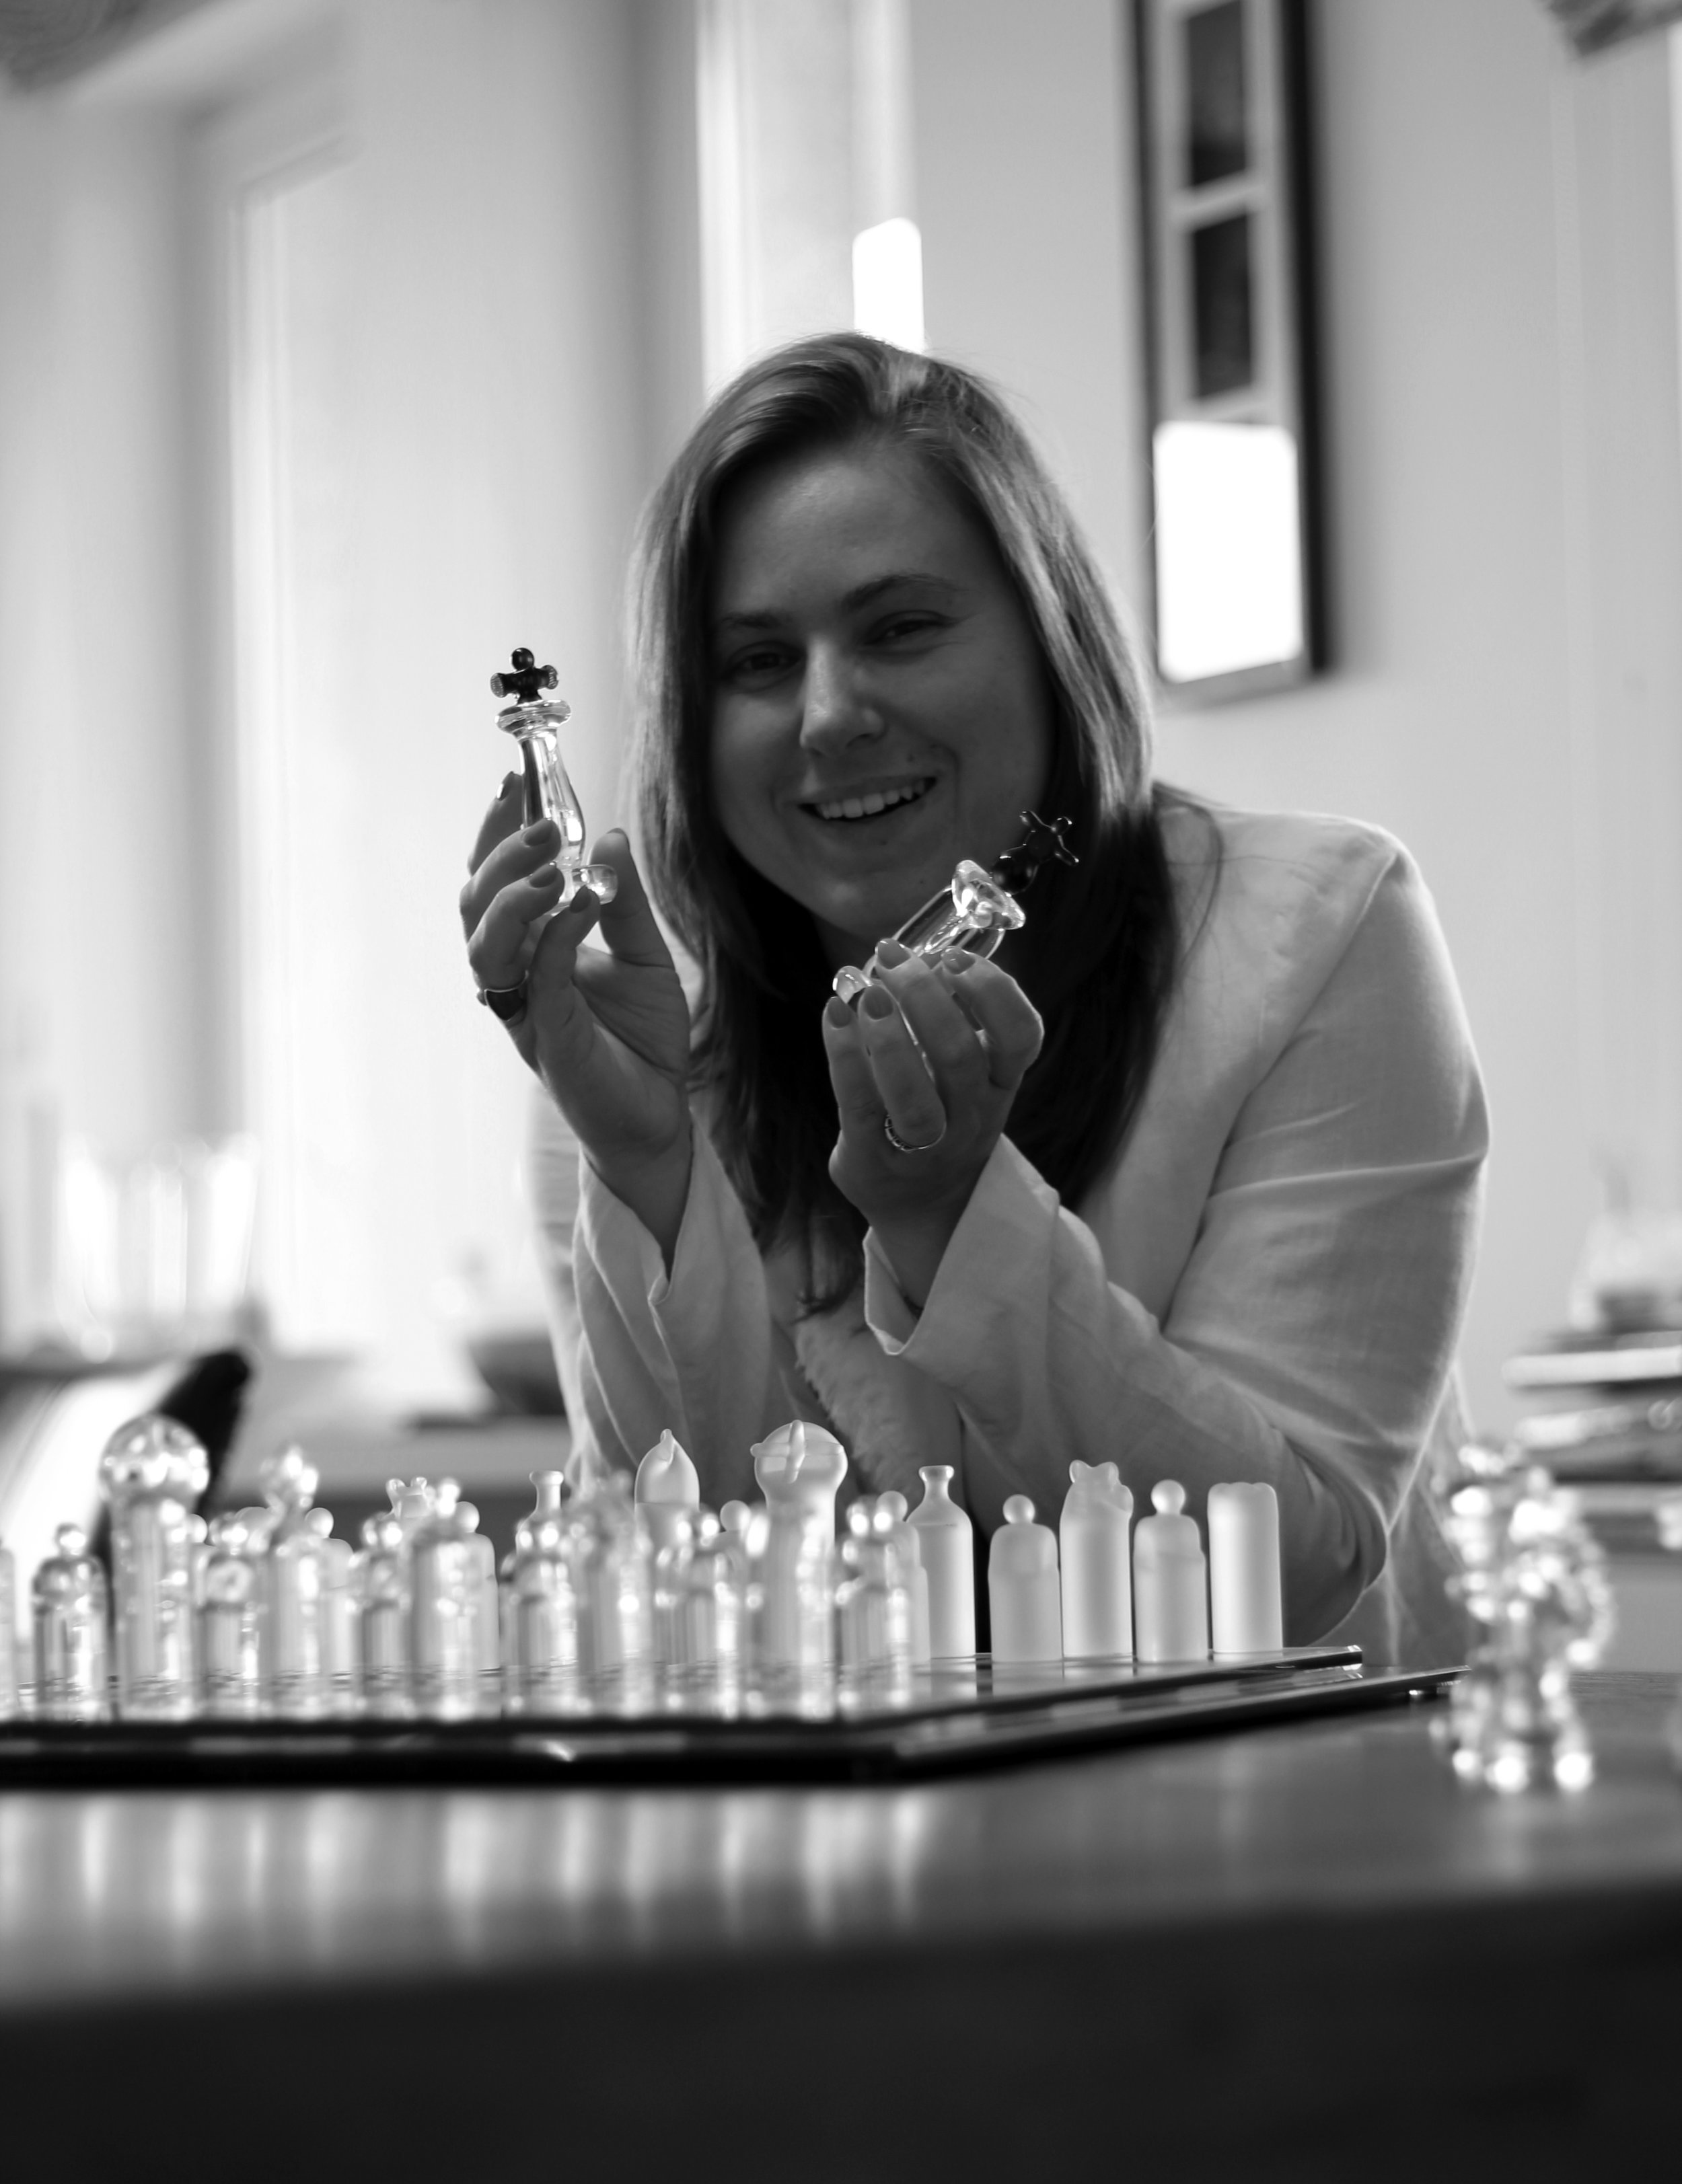 Judit Polgar” in Blankenberge – European Chess Union